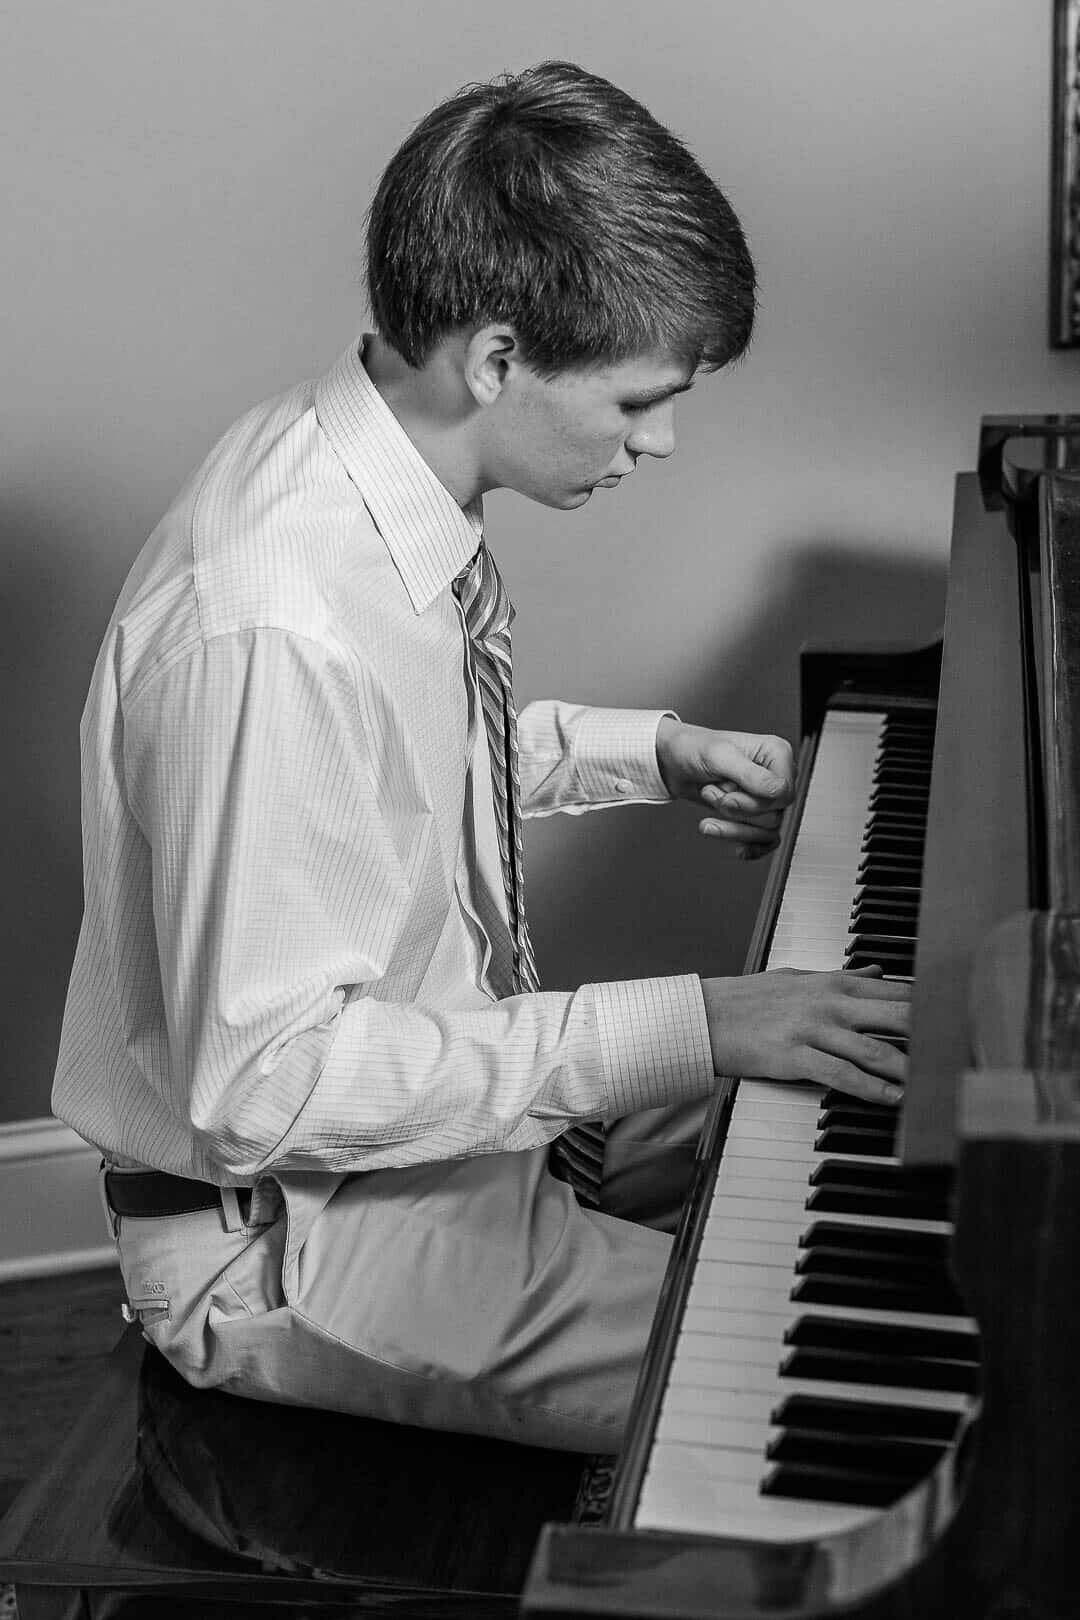 High School boy plays piano